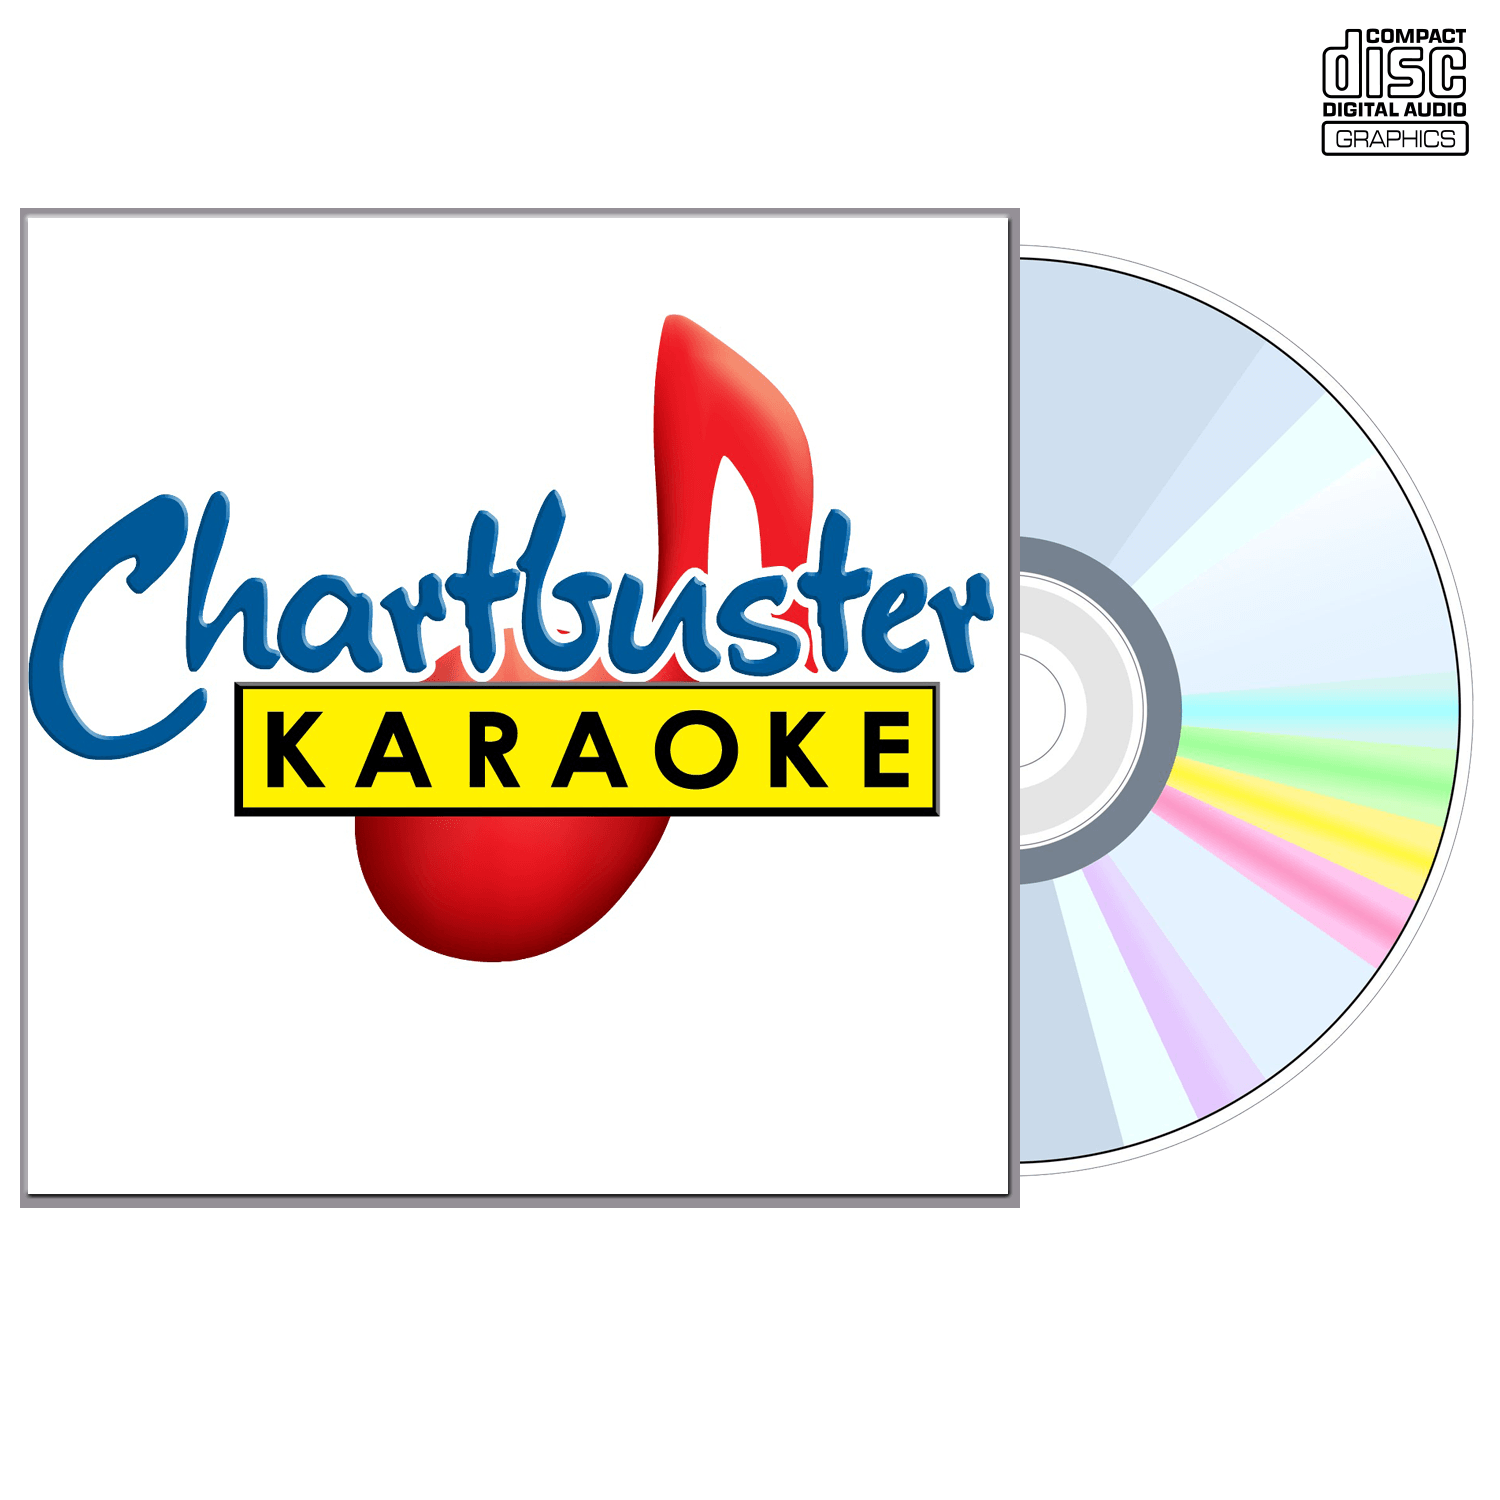 Anne Murray - CD+G - Chartbuster Karaoke - Karaoke Home Entertainment